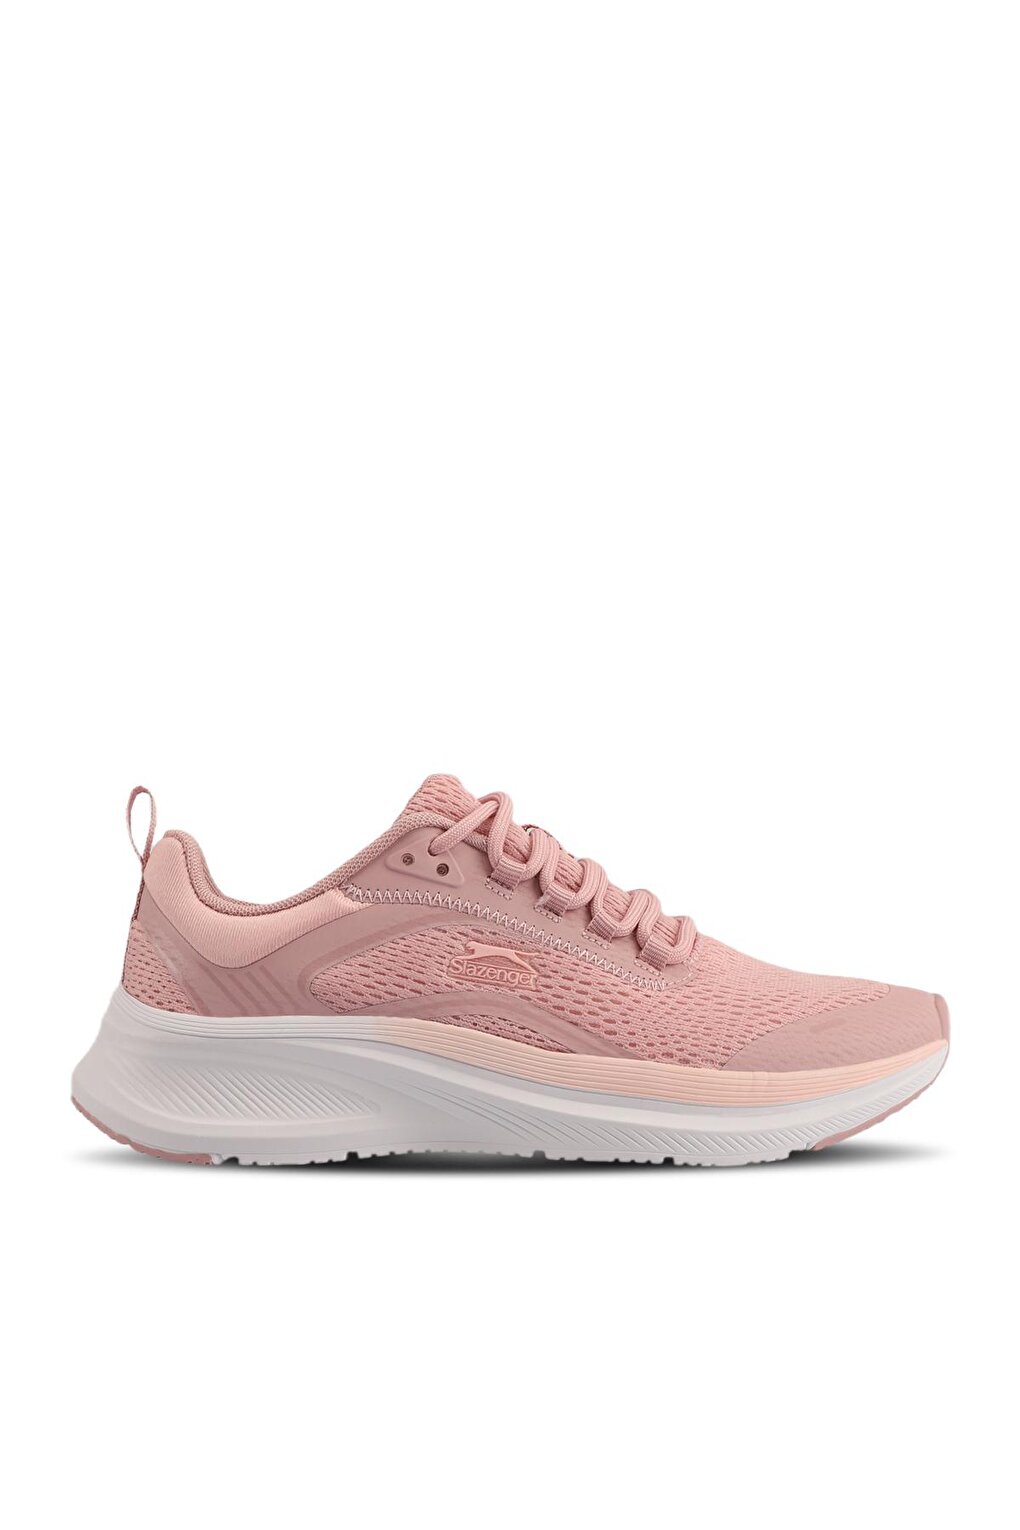 WALDO Sneaker Женская обувь Розовый SLAZENGER daphne sneaker женская обувь белый розовый slazenger